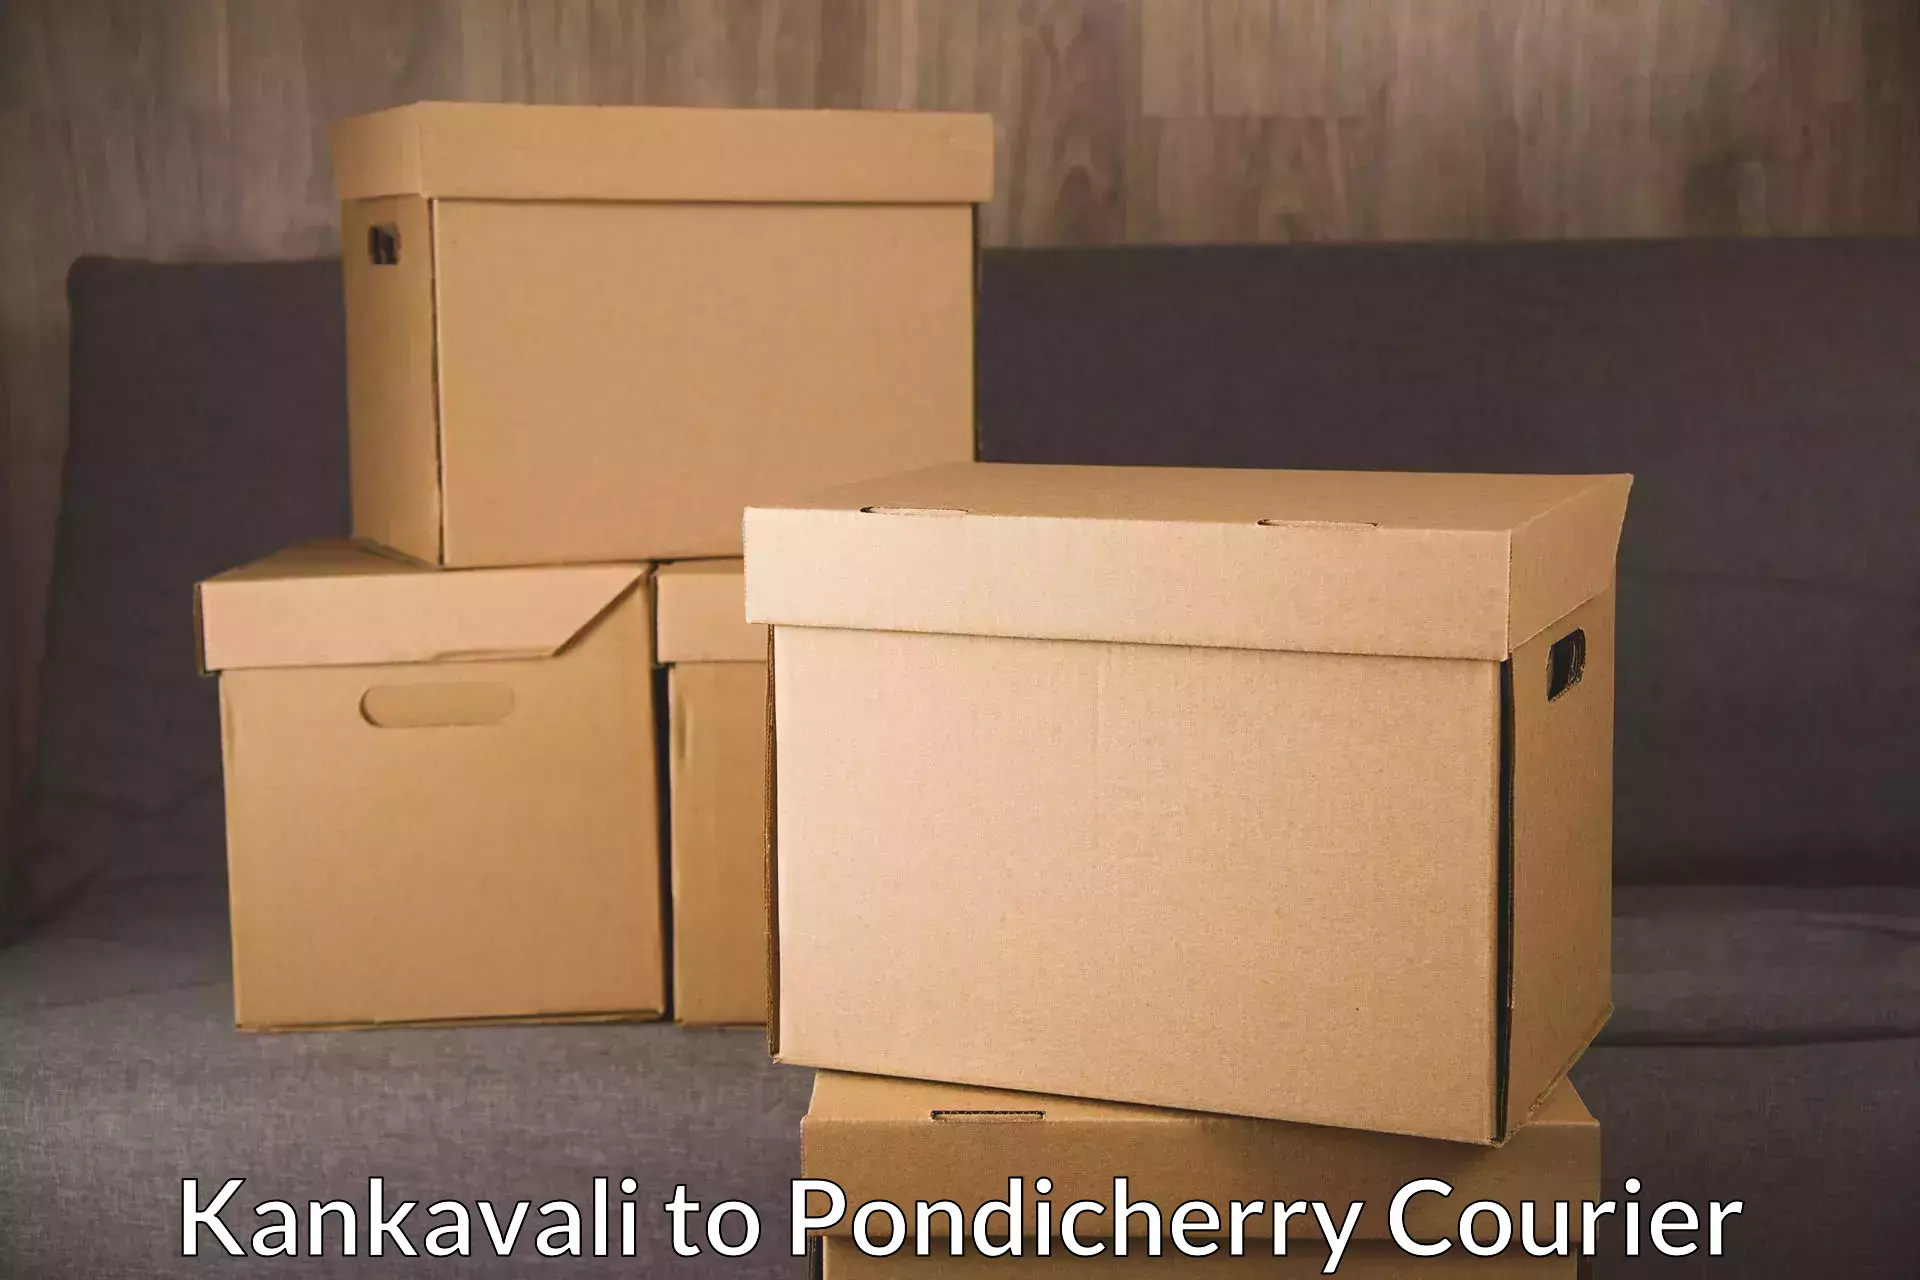 Courier service innovation Kankavali to Pondicherry University